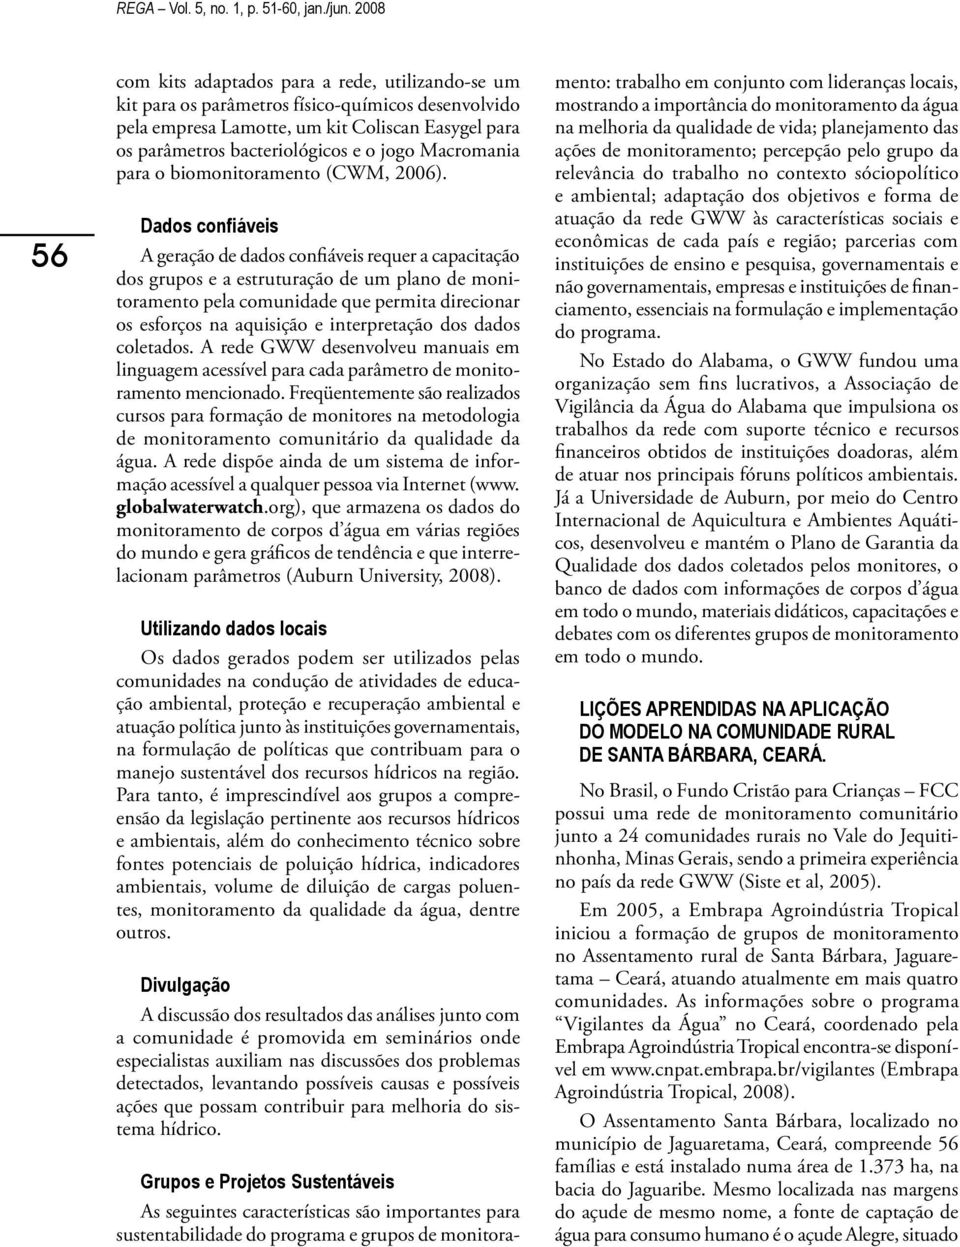 Macromania para o biomonitoramento (CWM, 2006).